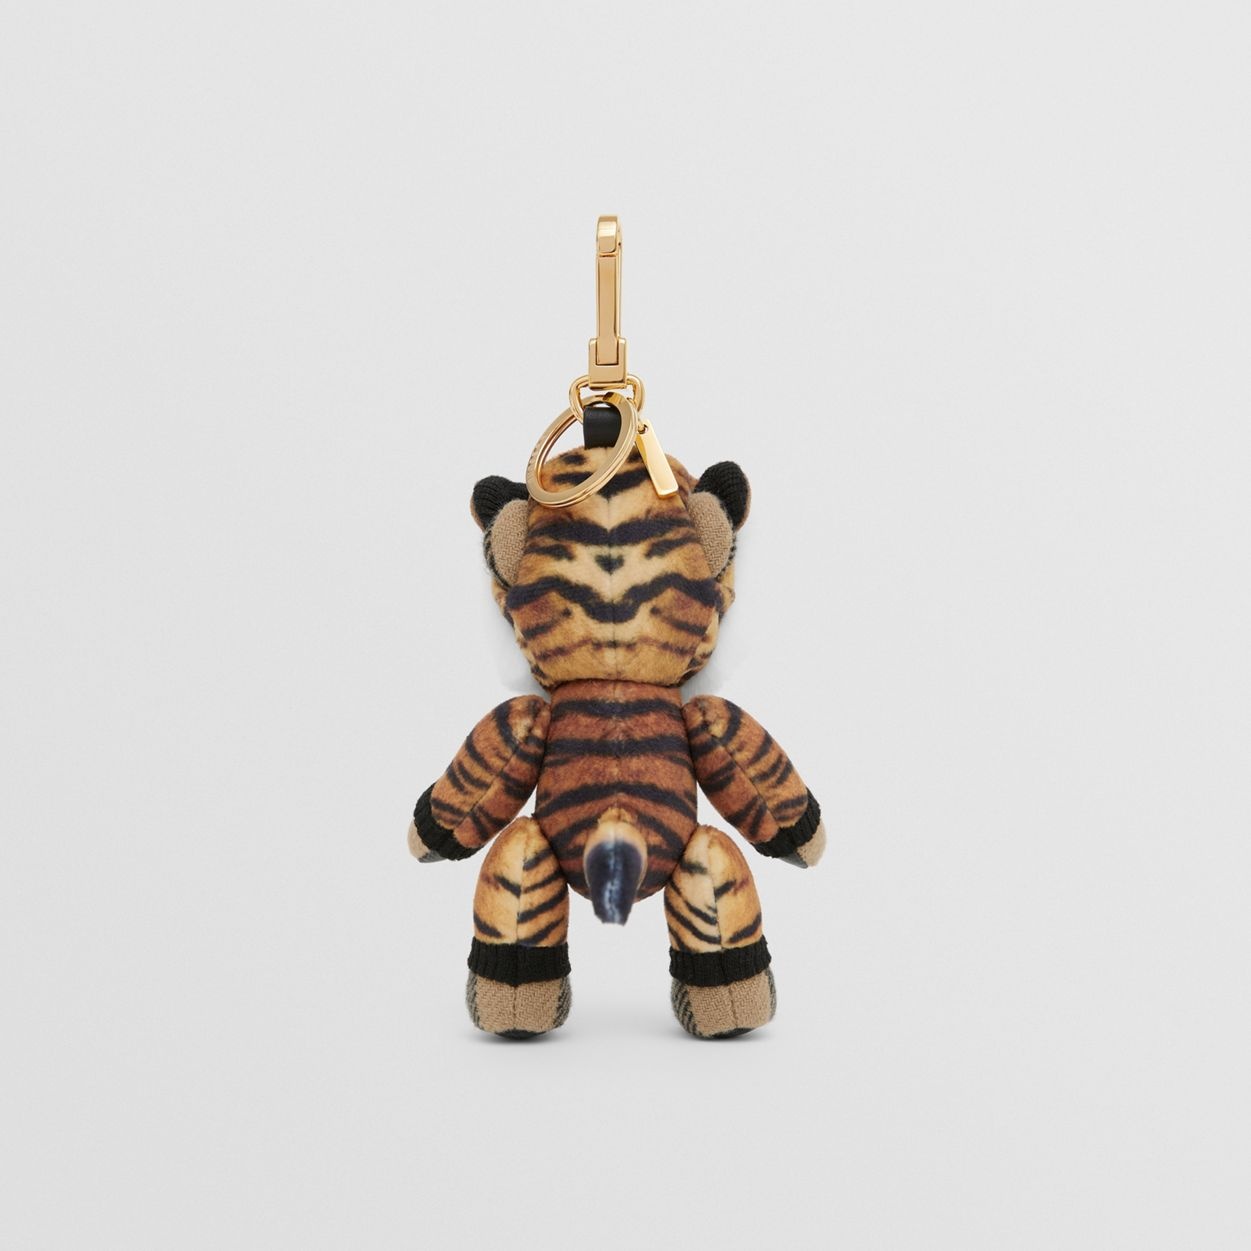 Thomas Bear Charm in Tiger Costume - 5